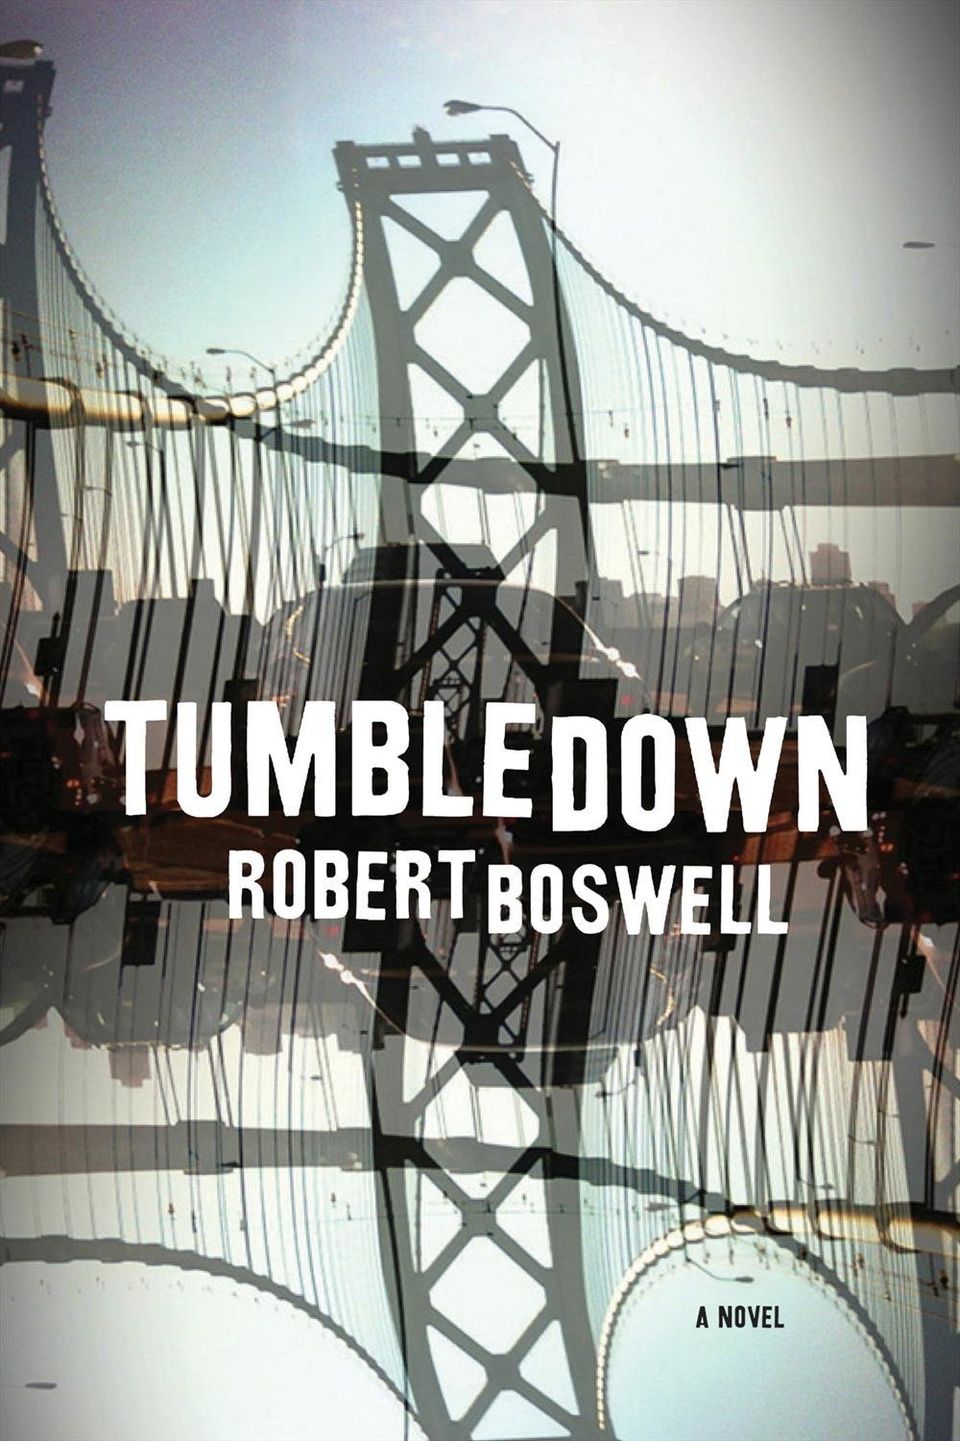 Tumbledown by Robert Boswell (Graywolf) 